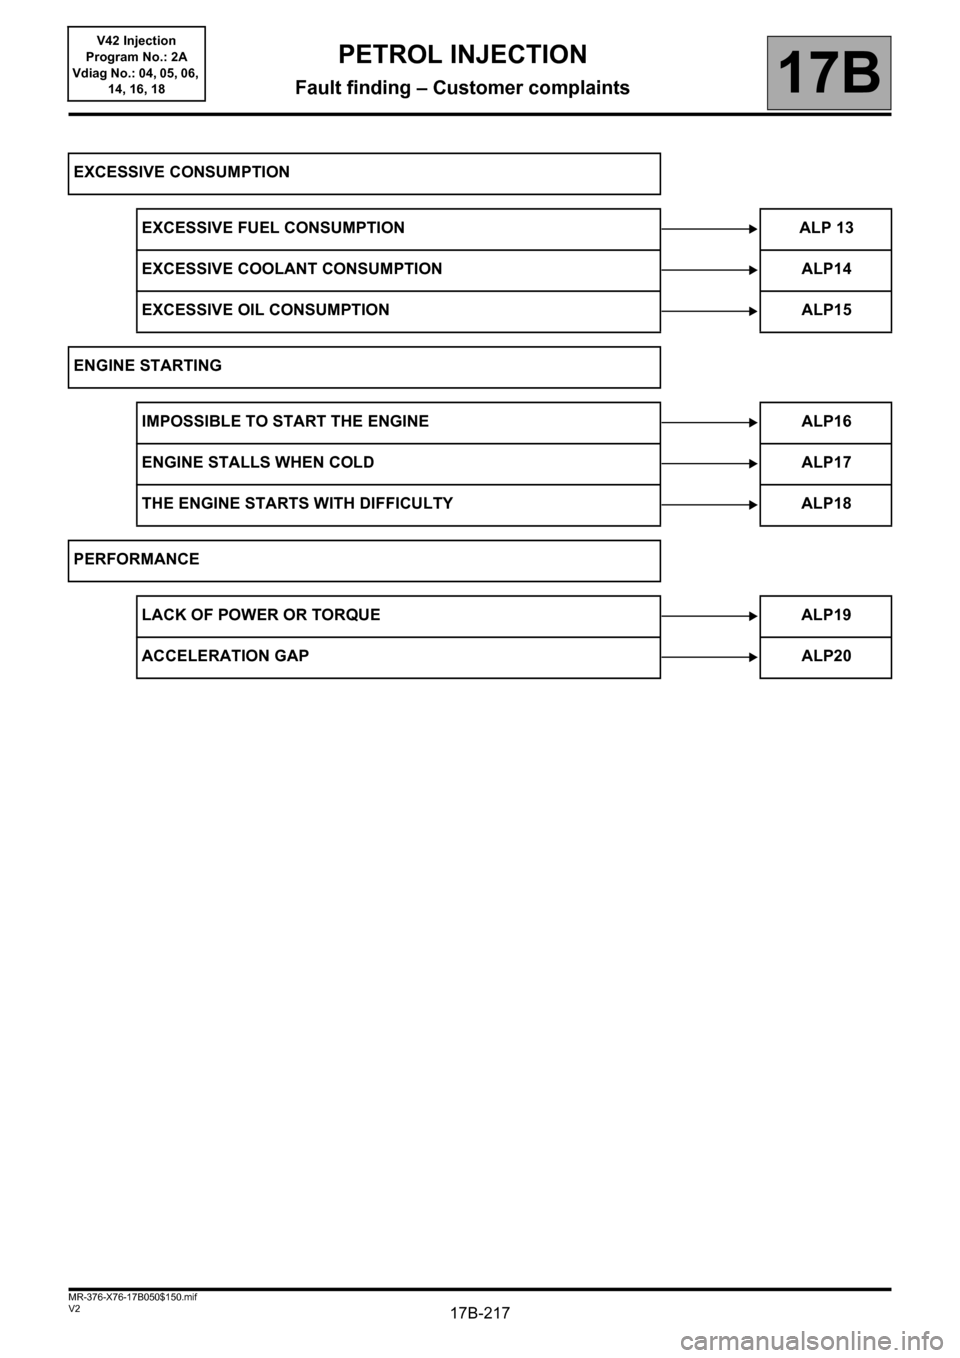 RENAULT KANGOO 2013 X61 / 2.G Petrol V42 Injection Workshop Manual 17B-217V2 MR-376-X76-17B050$150.mif
PETROL INJECTION
Fault finding – Customer complaints17B
V42 Injection
Program No.: 2A
Vdiag No.: 04, 05, 06, 
14, 16, 18
EXCESSIVE CONSUMPTION
EXCESSIVE FUEL CONS